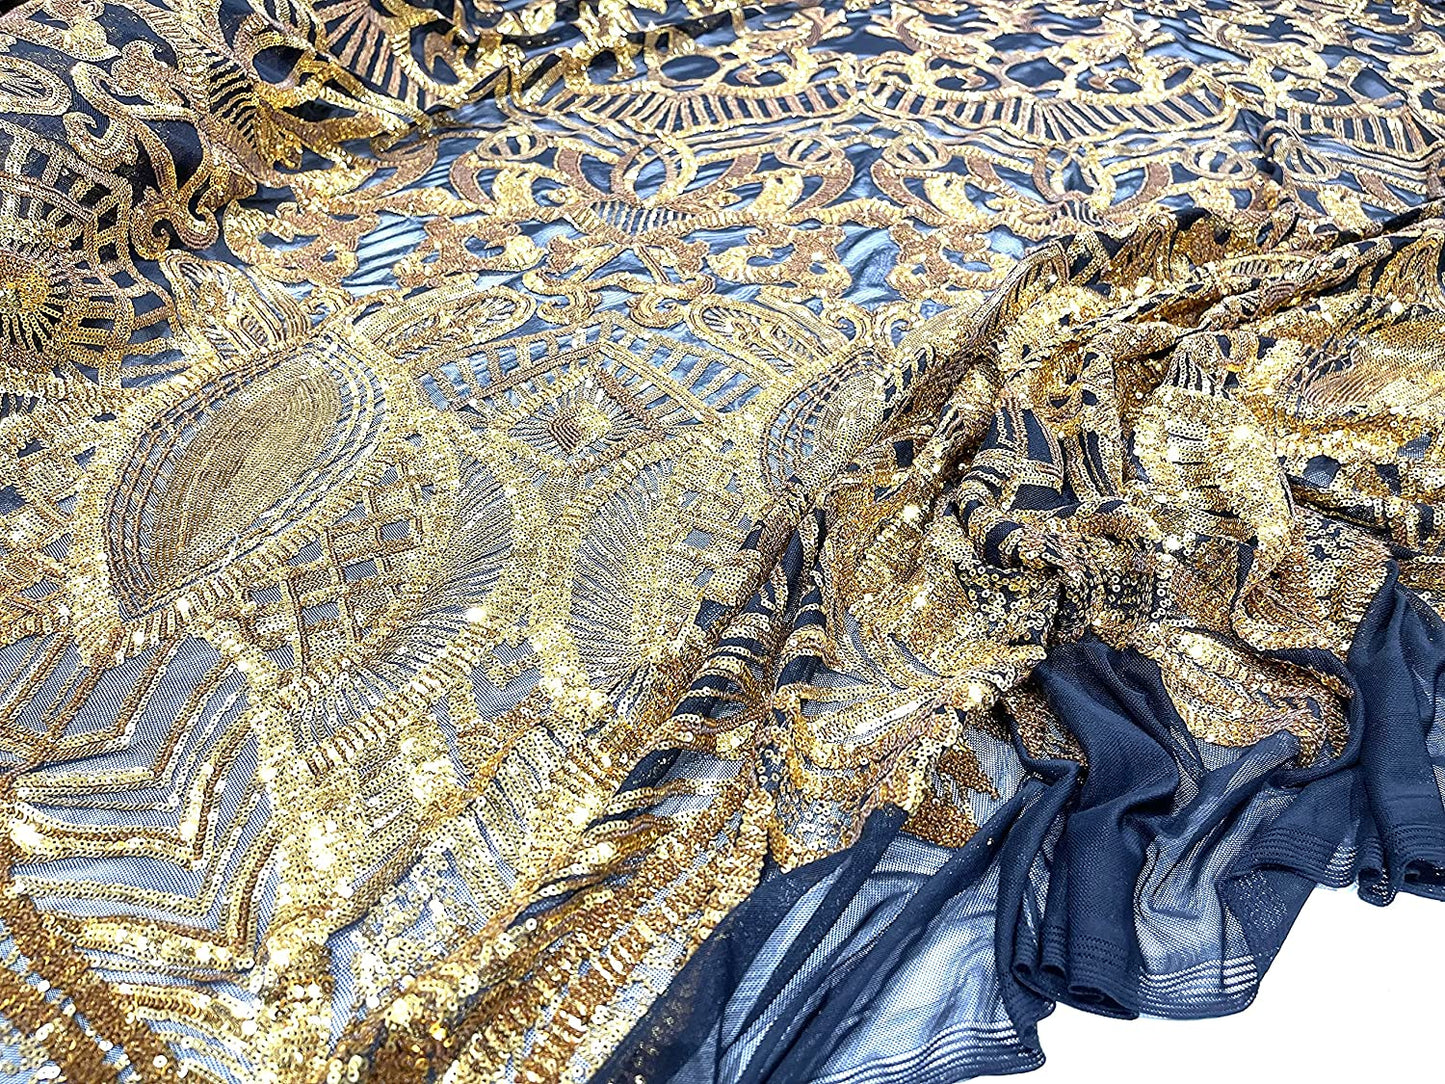 Iridescent Royalty Design On A 4 Way Stretch Mesh/Prom Fabric (1 Yard, Dark Gold on Black)